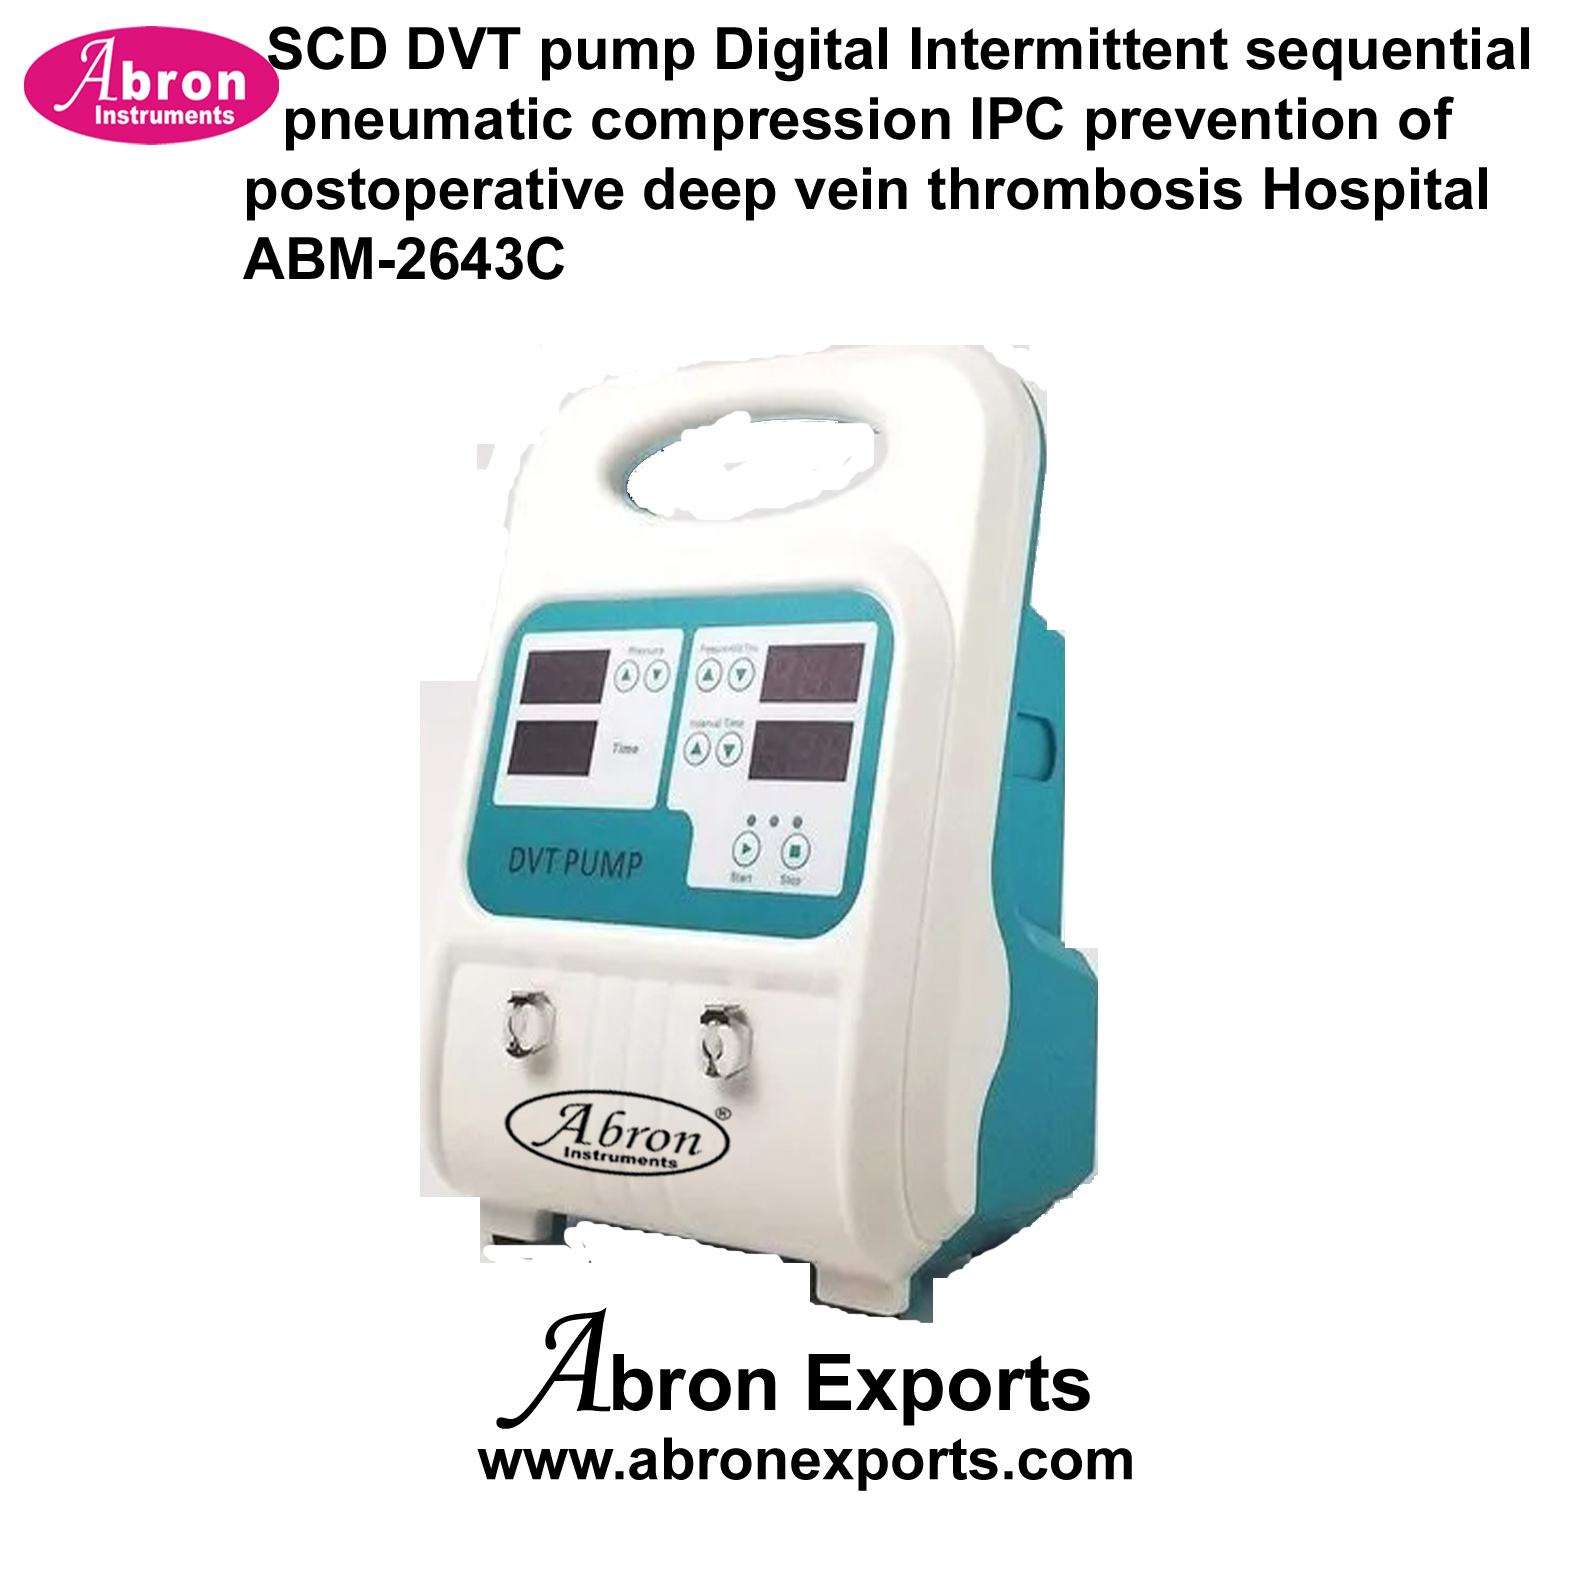 SCD DVT pump Digital Intermittent sequential pneumatic compression IPC prevention of postoperative deep vein thrombosis Hospital Abron ABM-2643C  